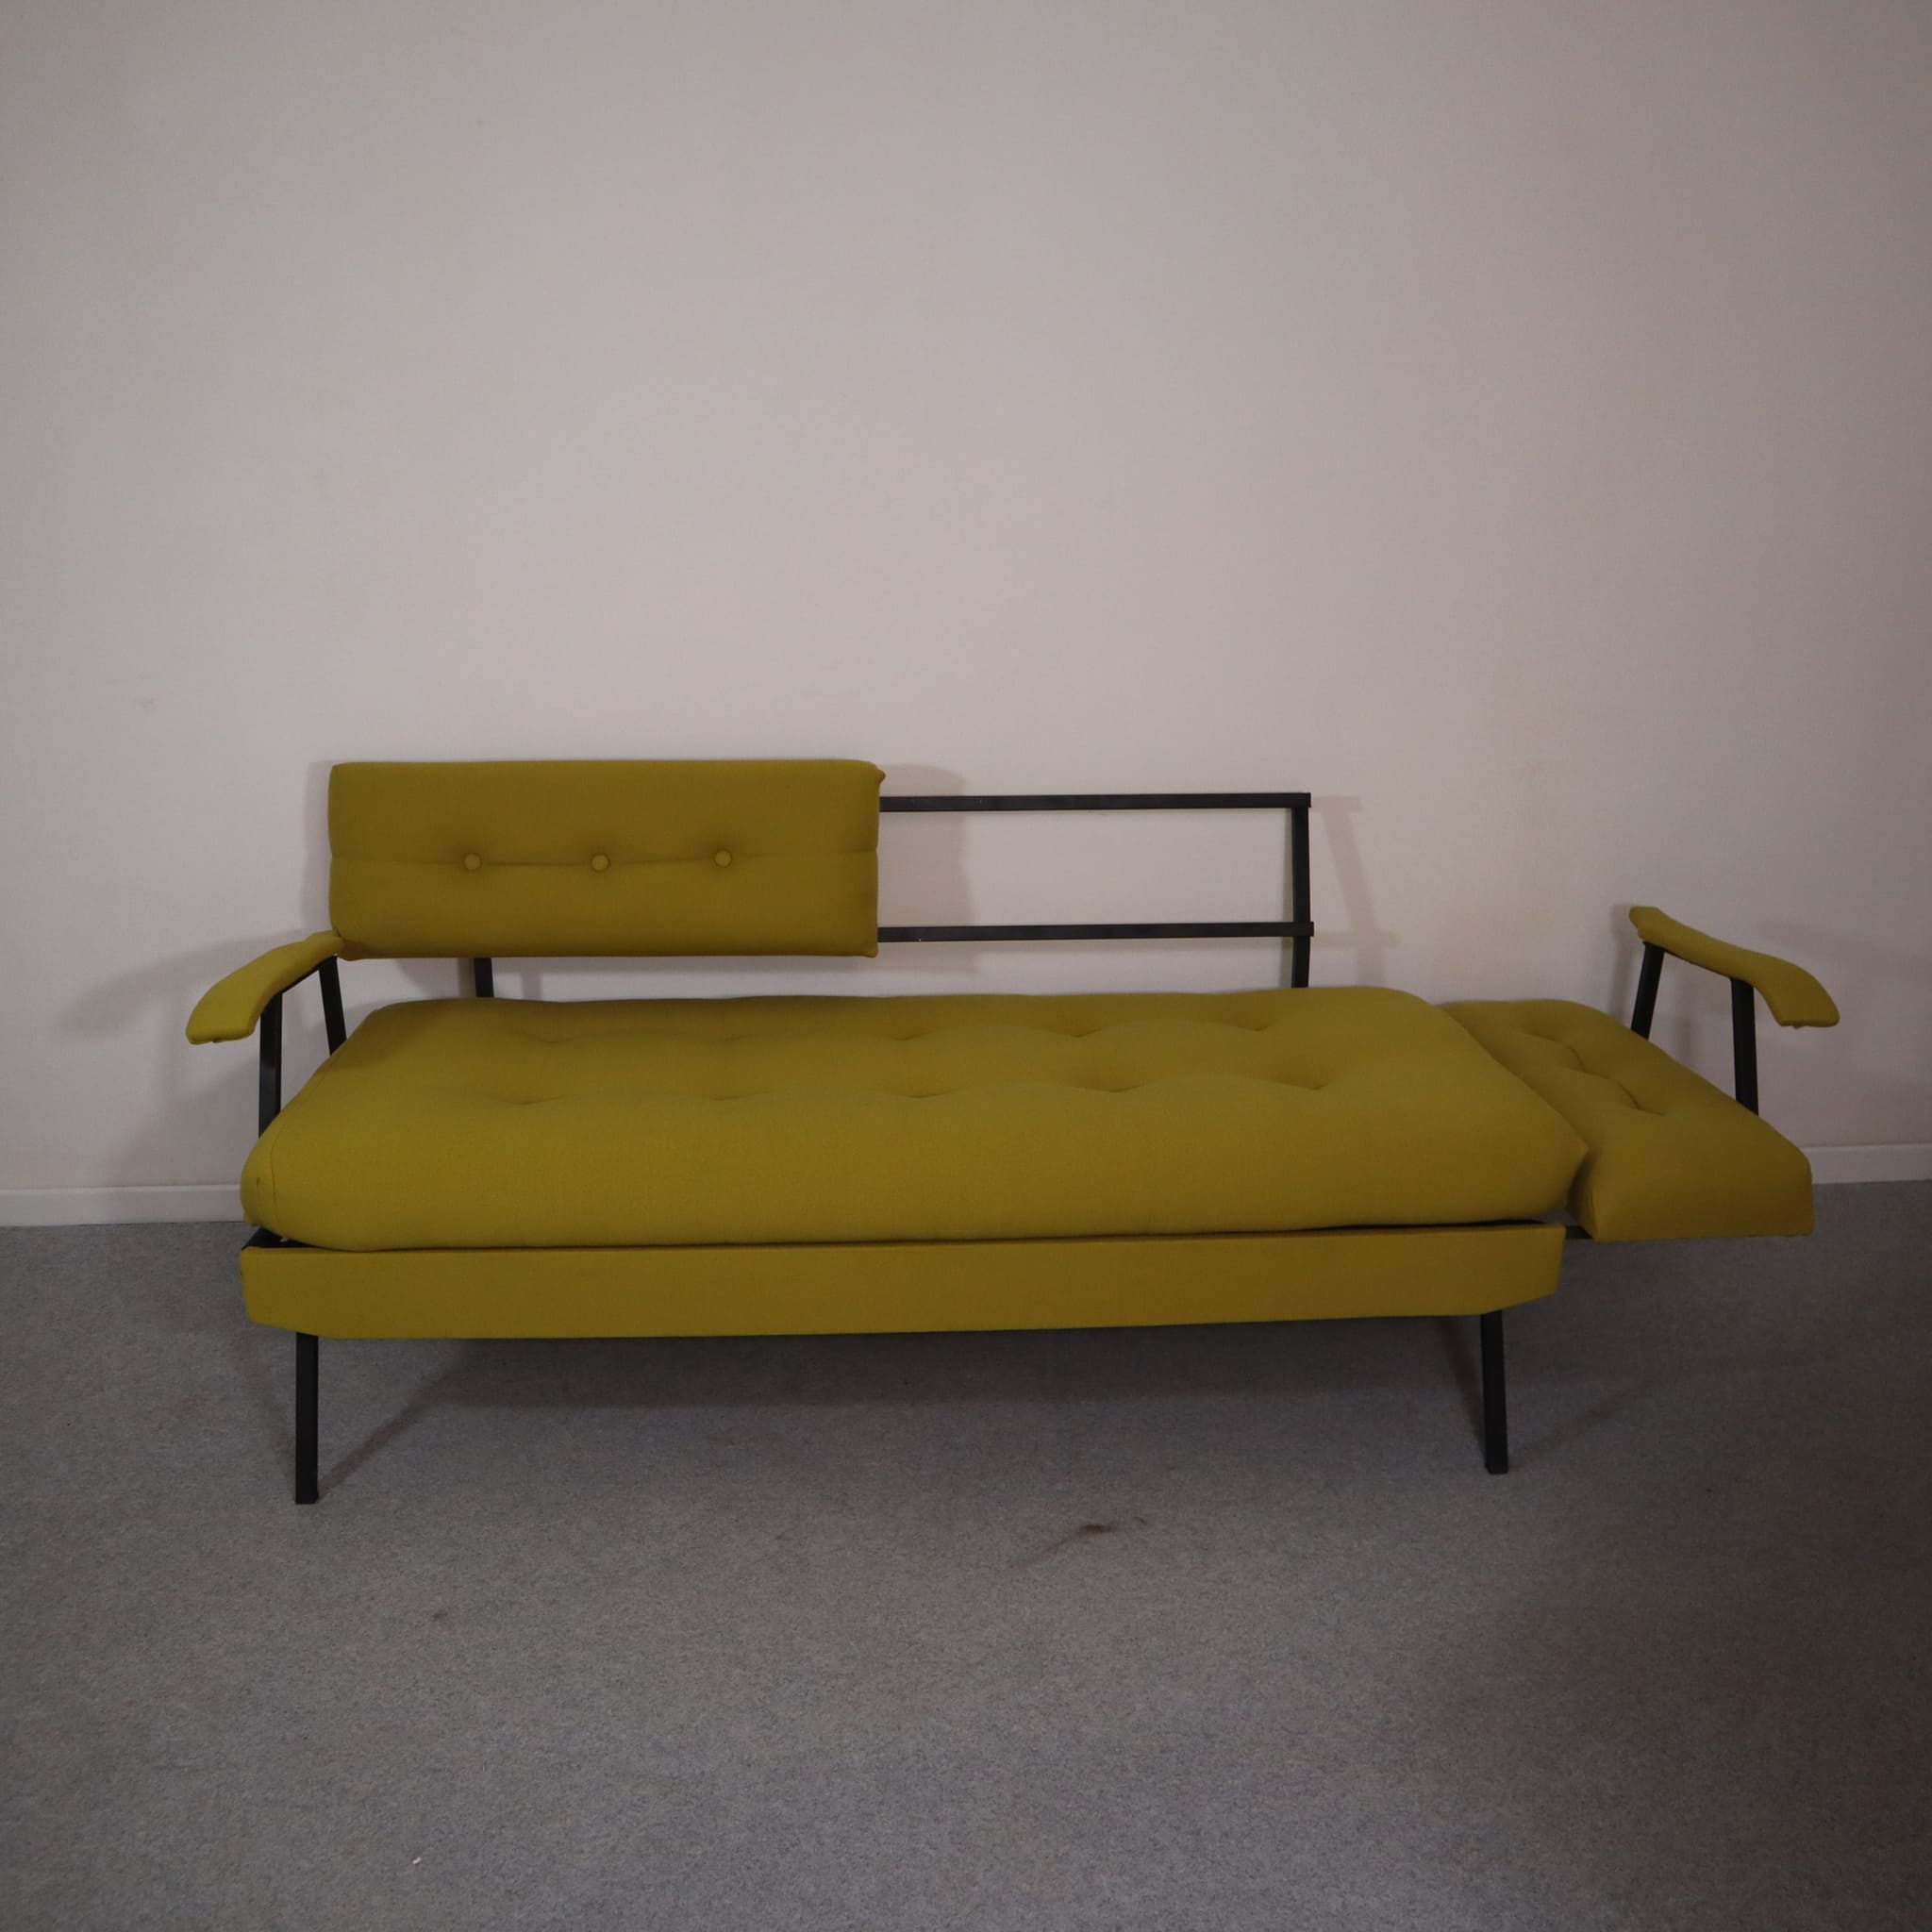 visionidepoca-visioni-depoca-sofa-bed-fabbric-green-lemon-vintage-modern-antiques-50s-made-italy-capittonnè-furniture-4